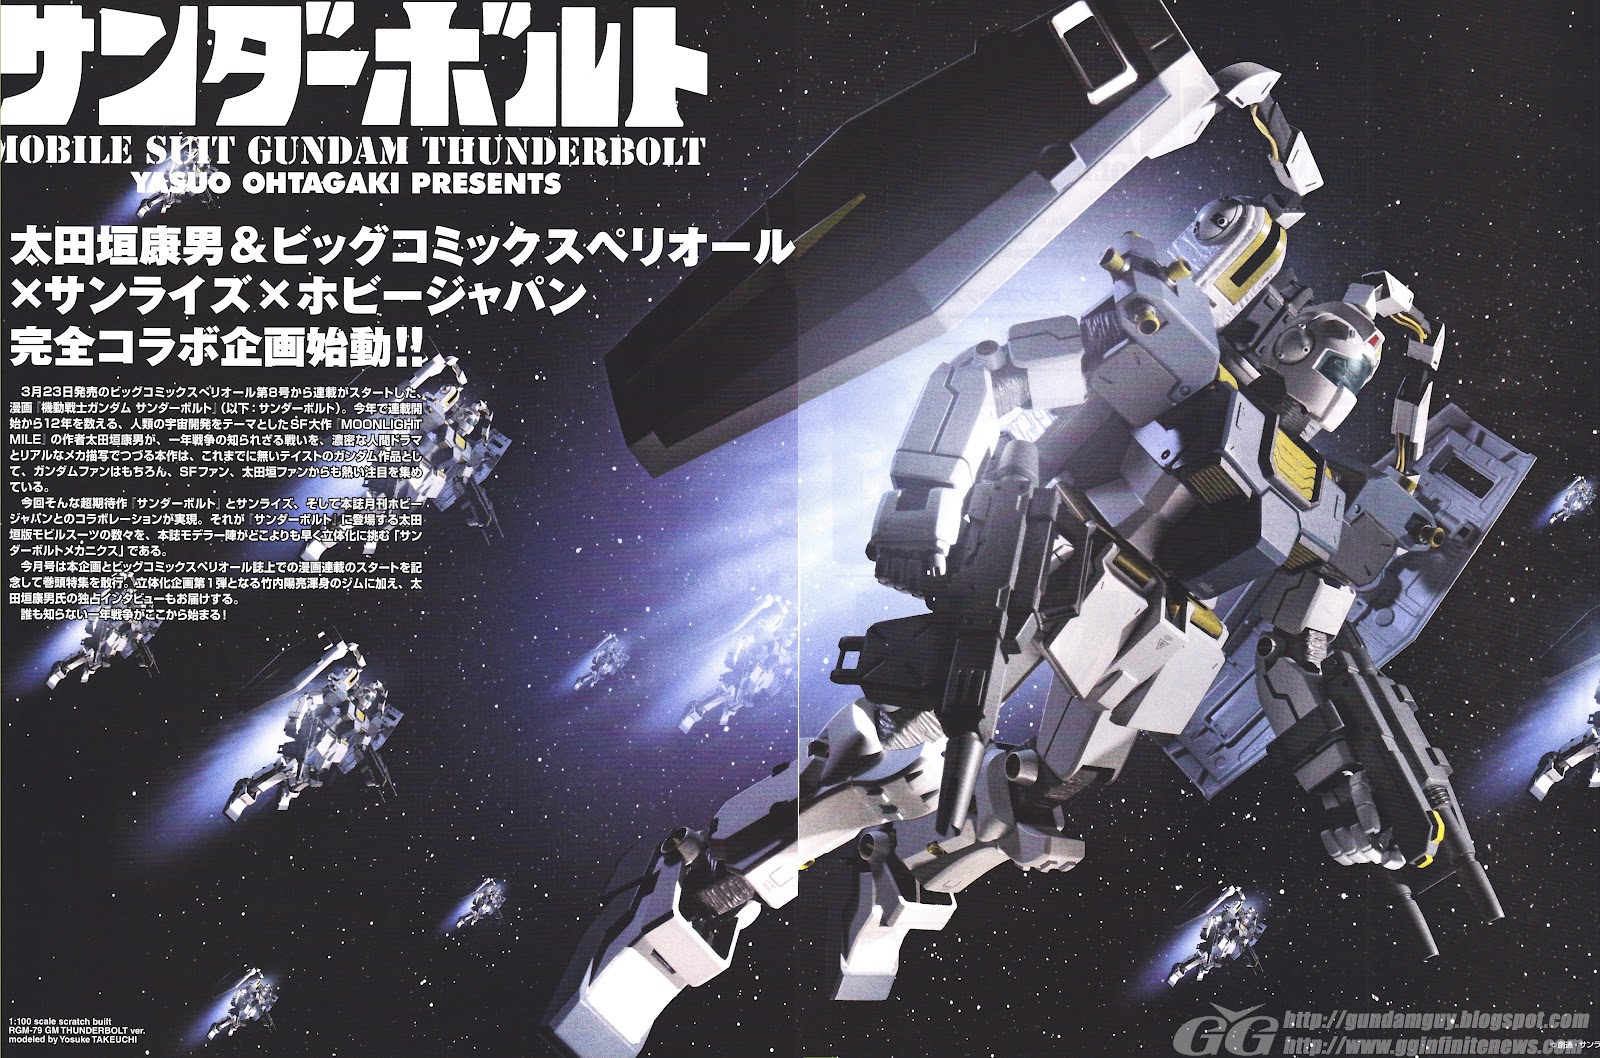 GUNDAM GUY: Yasuo Ohtagaki's Mobile Suit Gundam Thunderbolt Manga Series 79 GM Wallpaper Size Poster Image